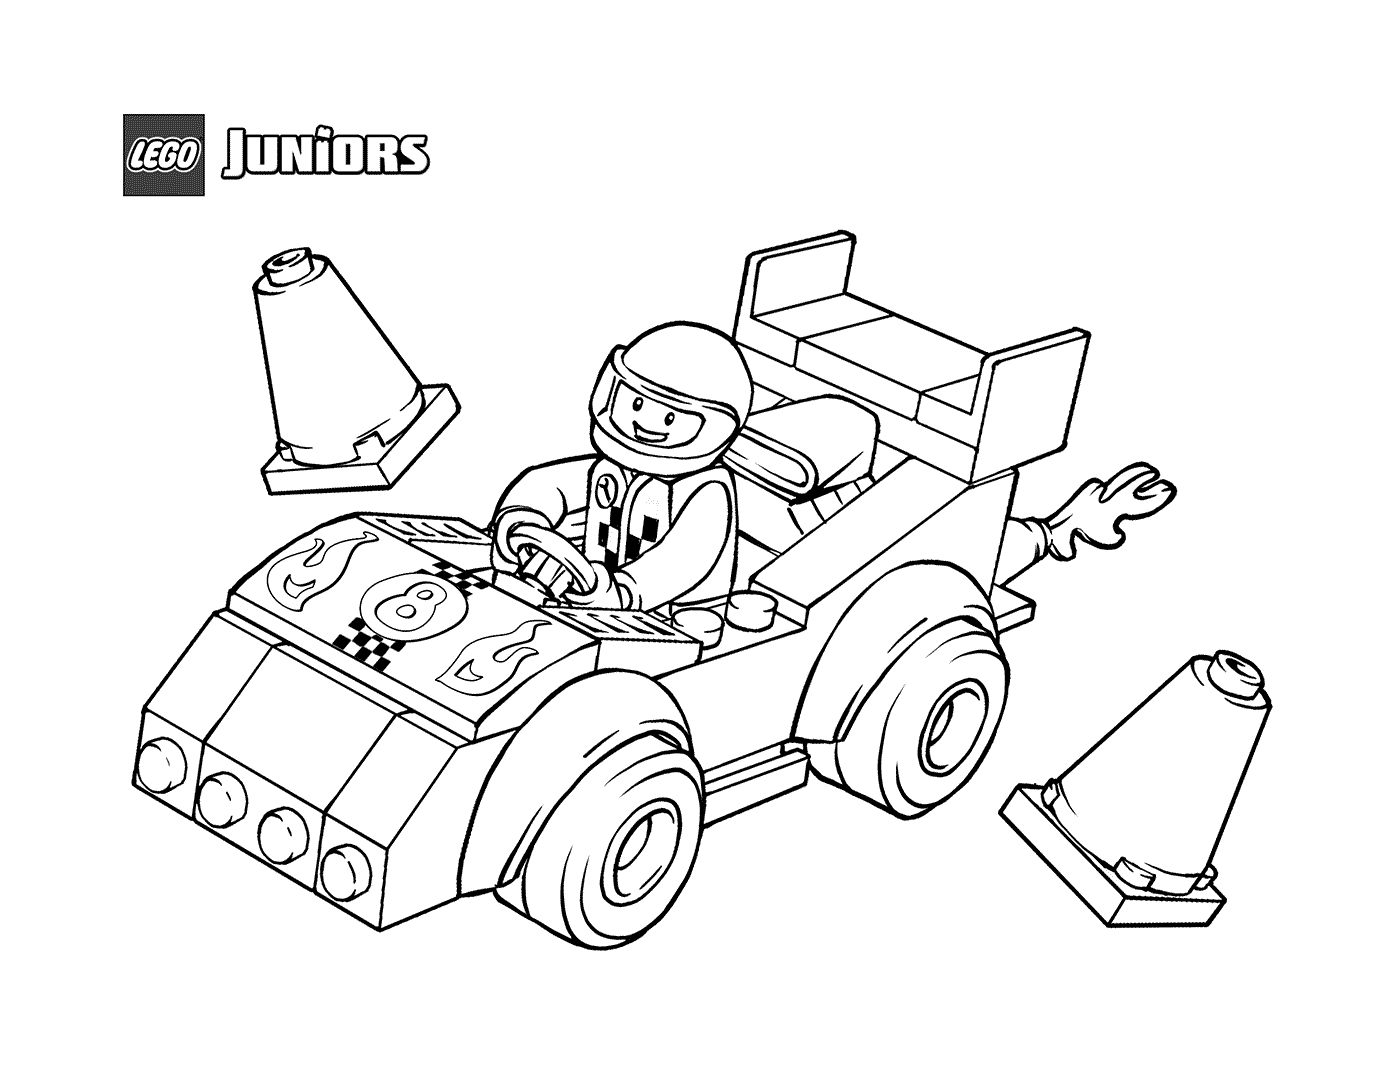  carro de corrida LEGO Junior 